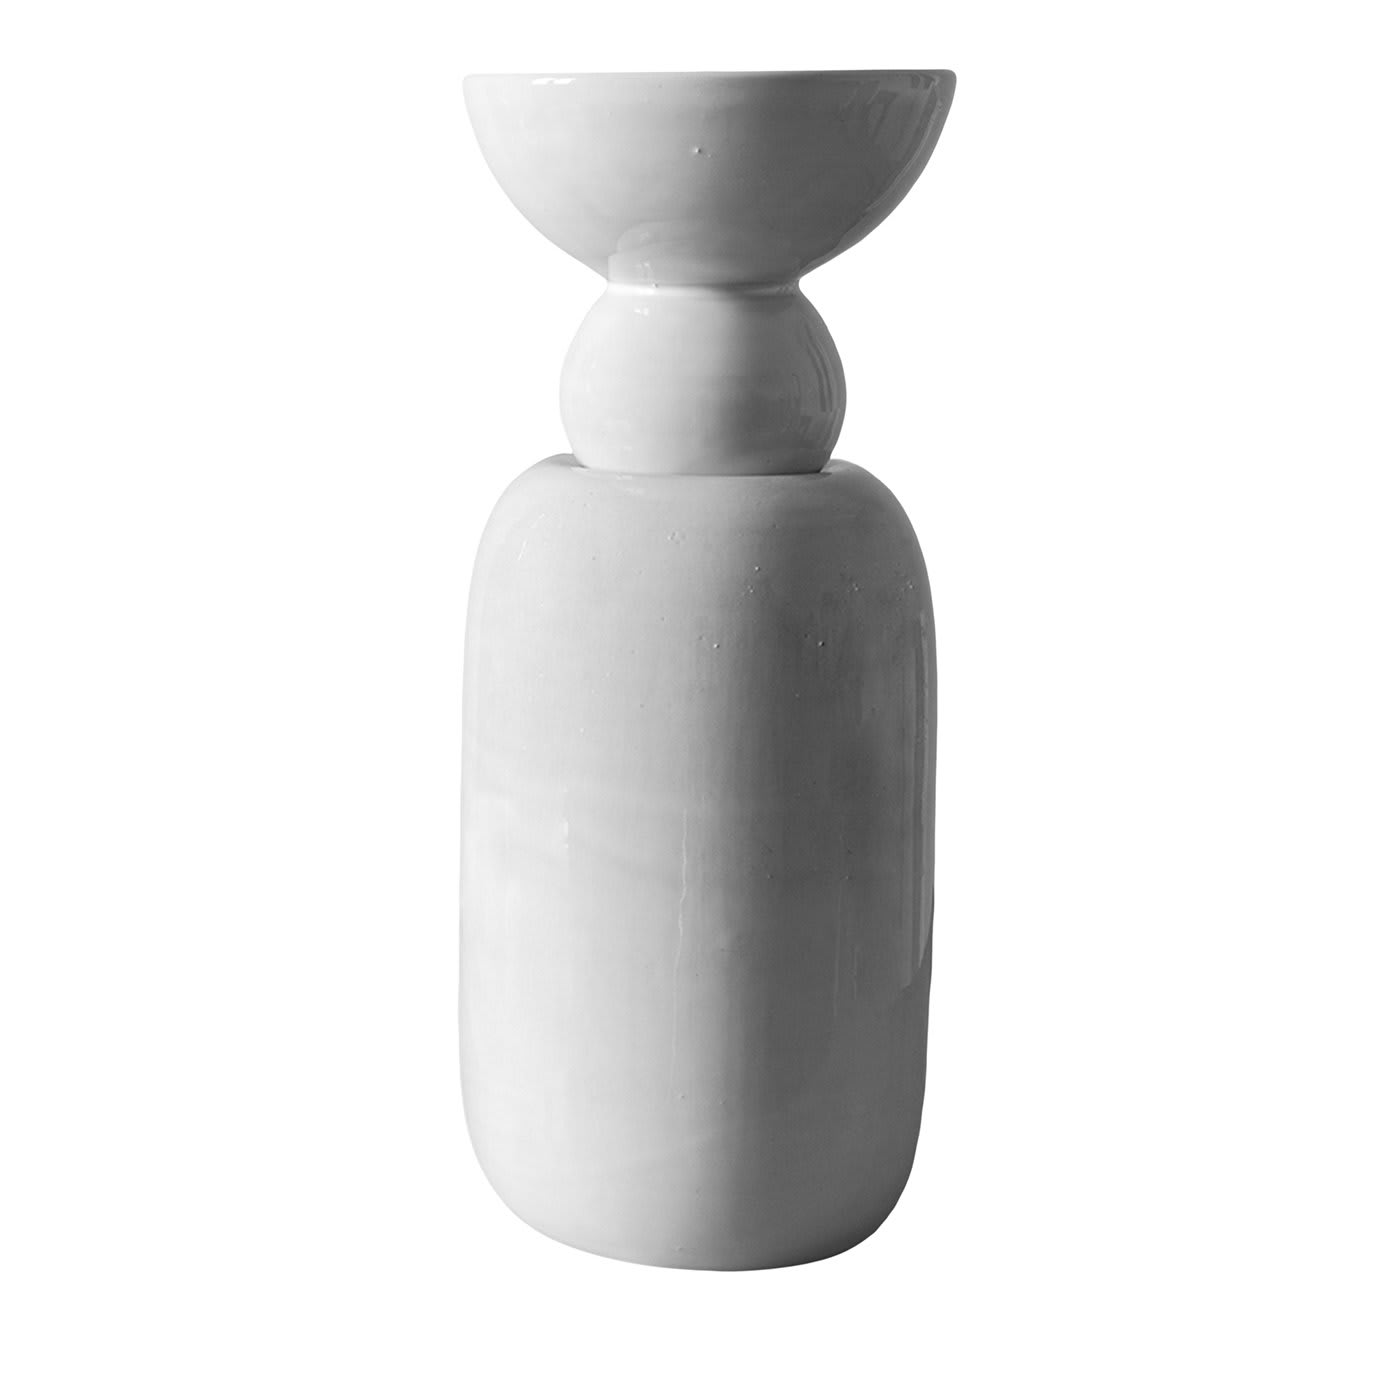 Botanica White Vase with Bowl Top - Gianfranco Conte